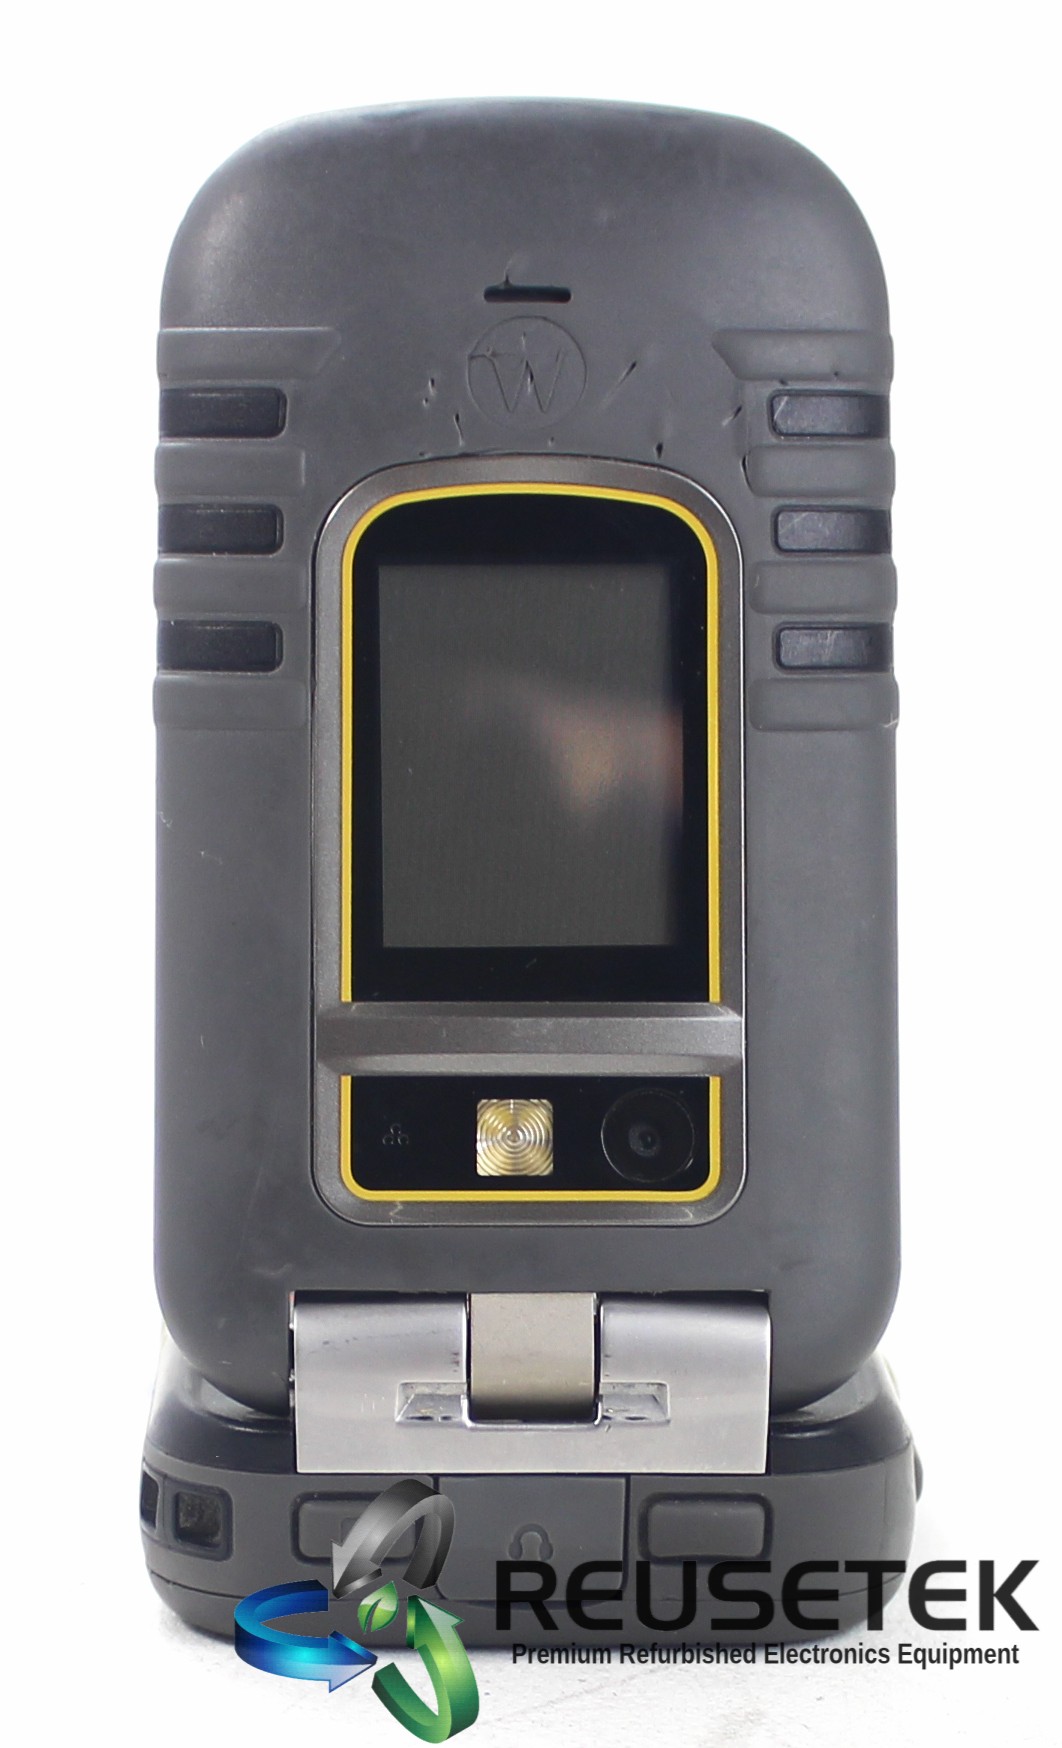 500030149-Motorola Brute i680 Sprint Black Cell Phone -image